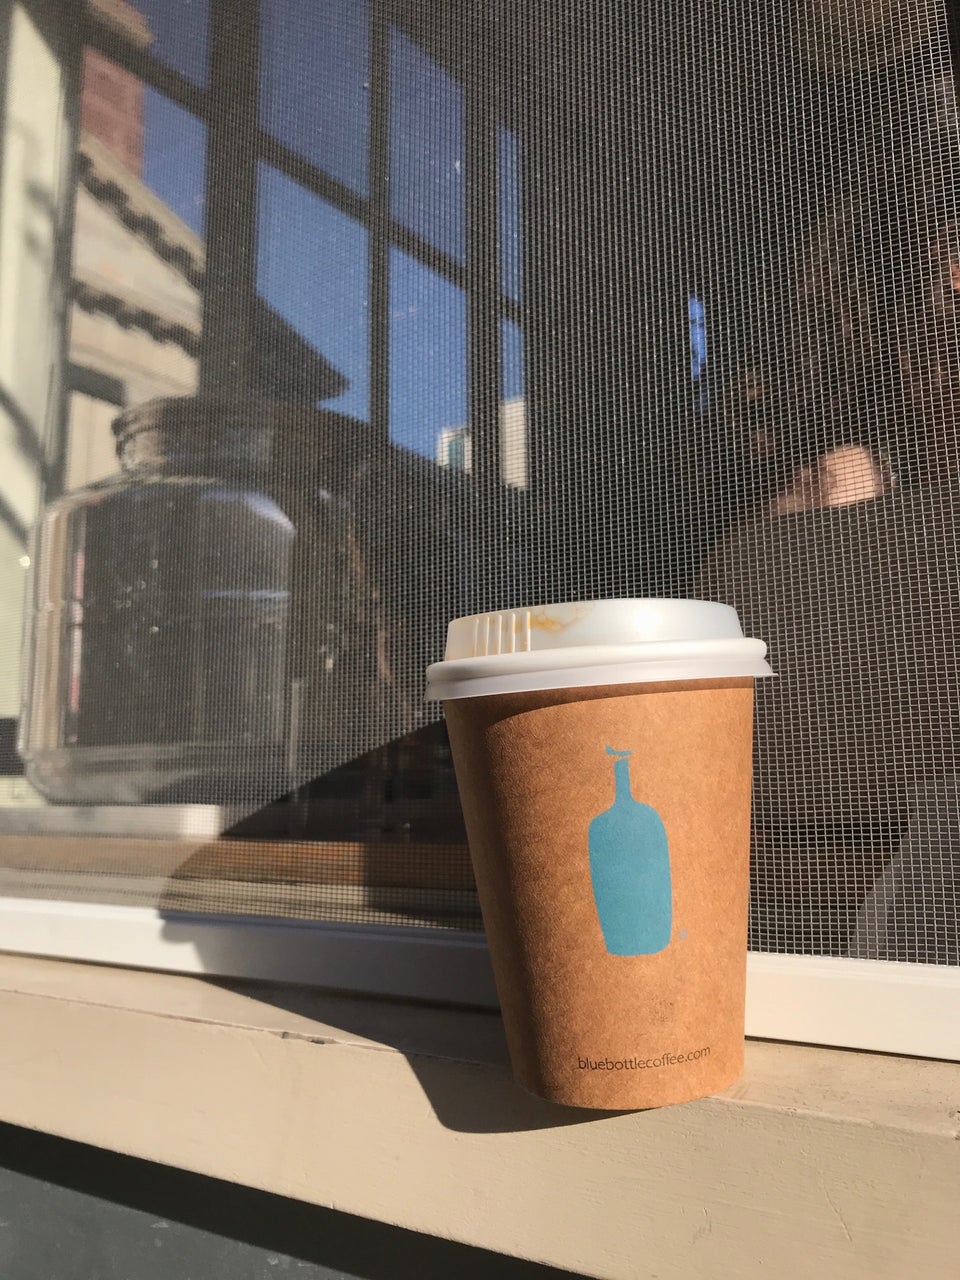 Photo of Blue Bottle Coffee